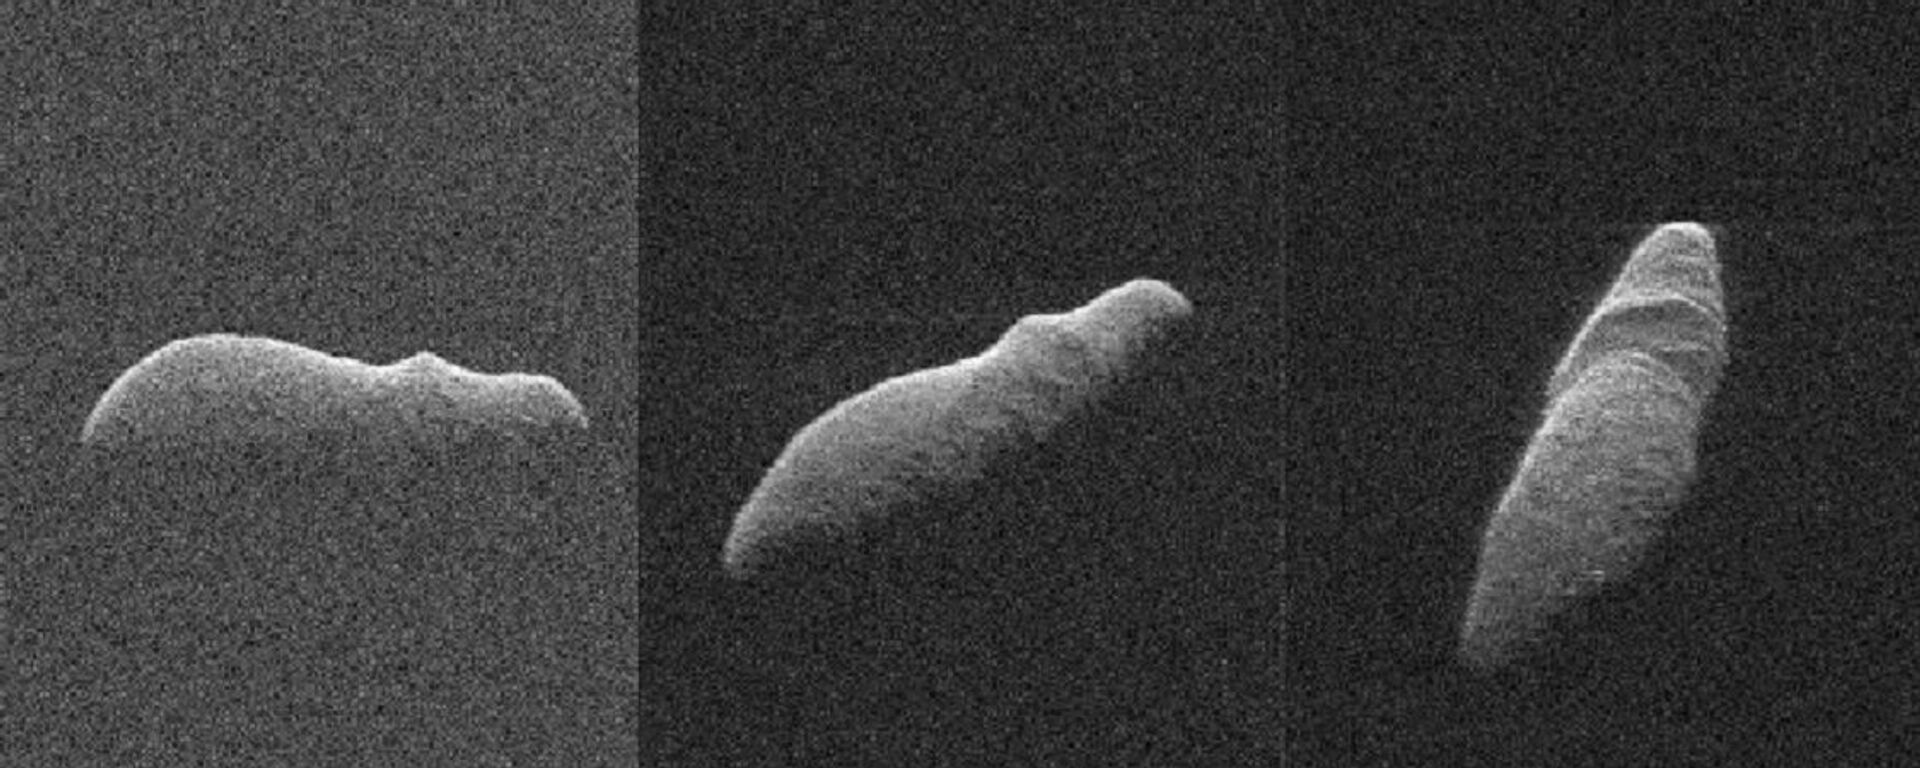 Потенциально опасный астероид 2003 SD220. - Sputnik Latvija, 1920, 05.01.2020